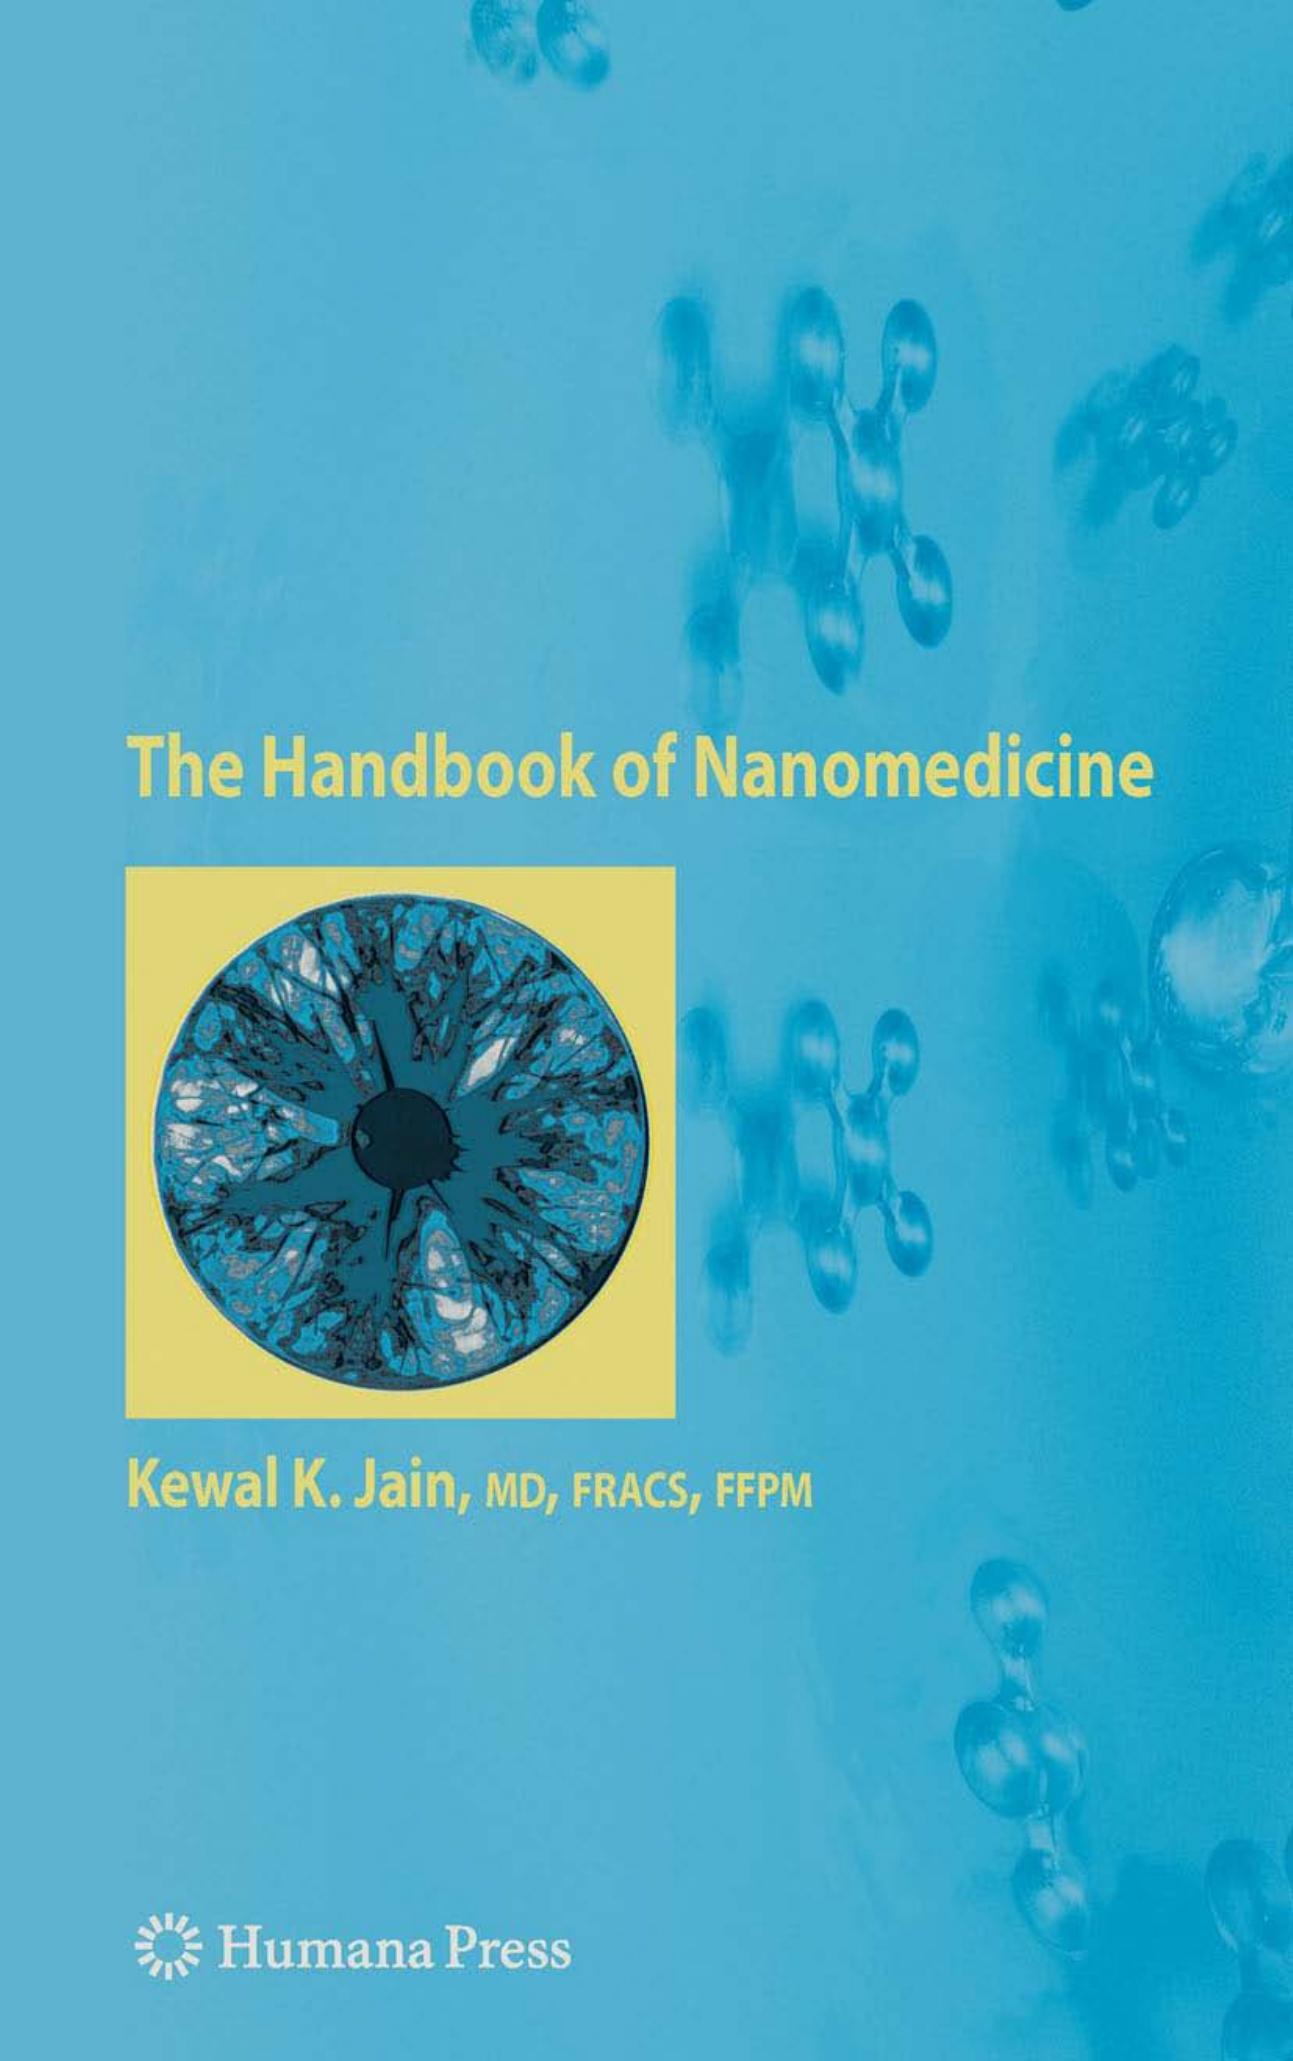 The Handbook of Nanomedicine 2008.pdf